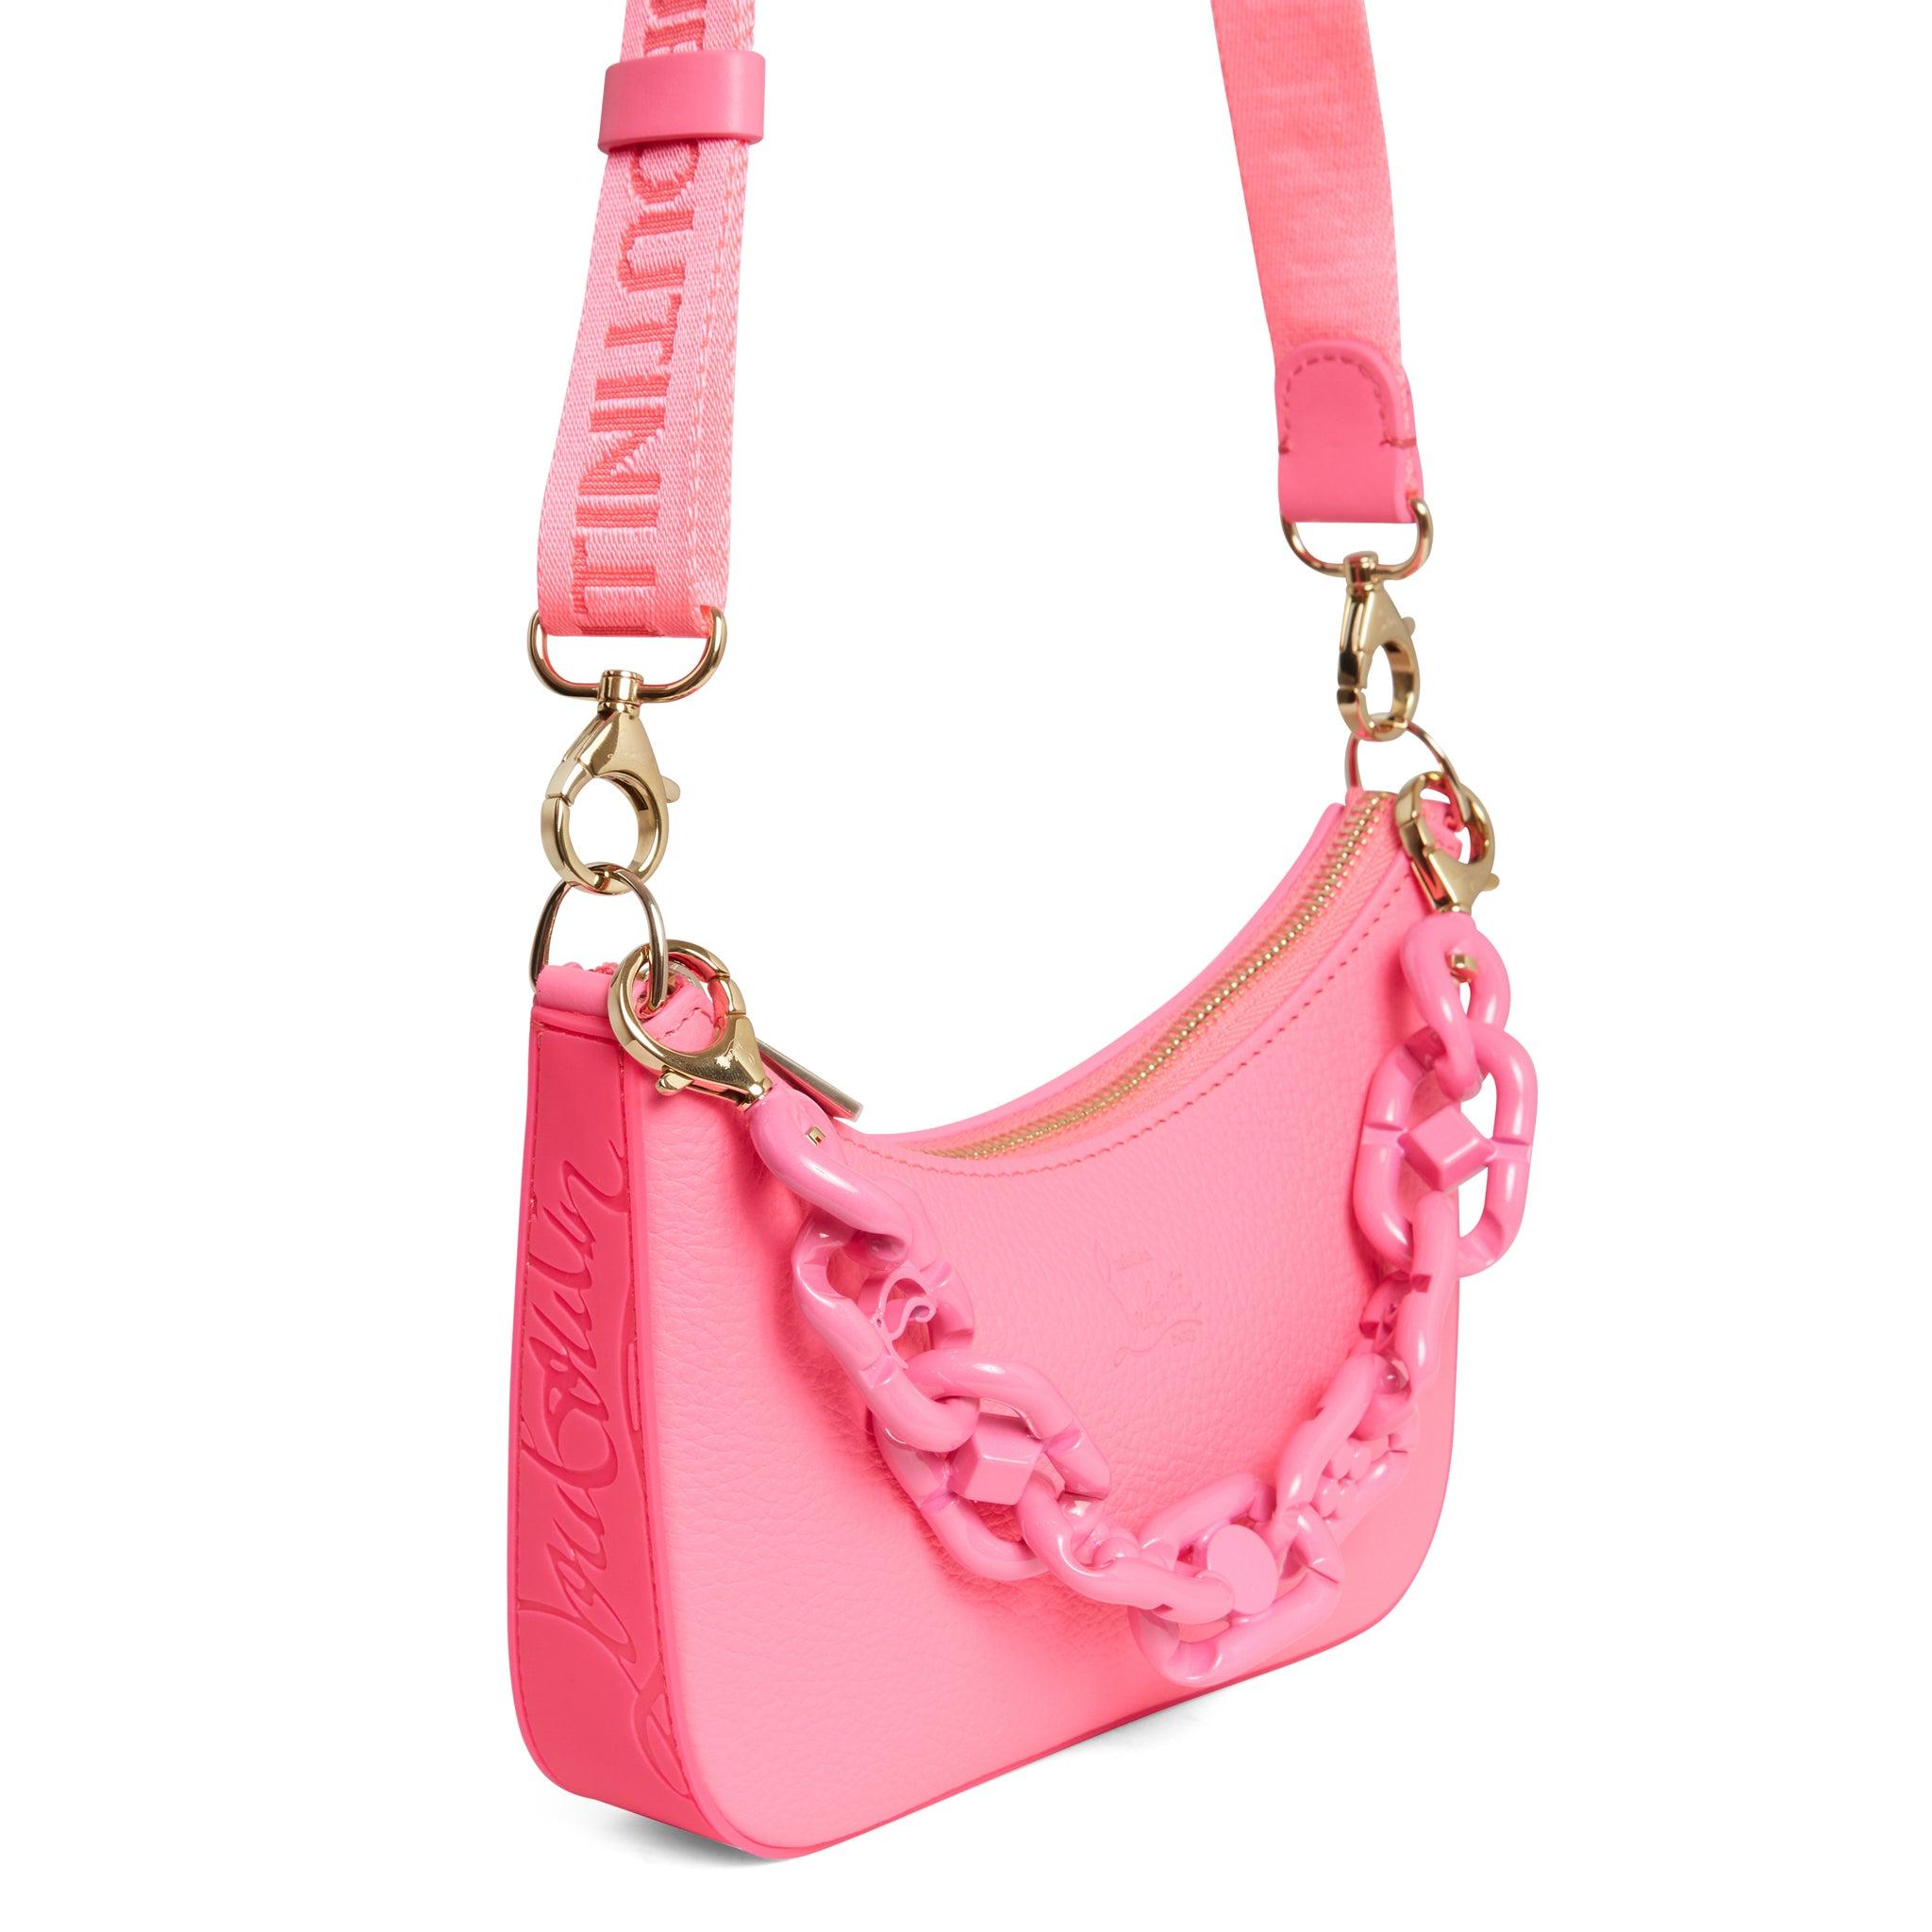 Loubila Chain Mini Leather Shoulder Bag in Pink - Christian Louboutin